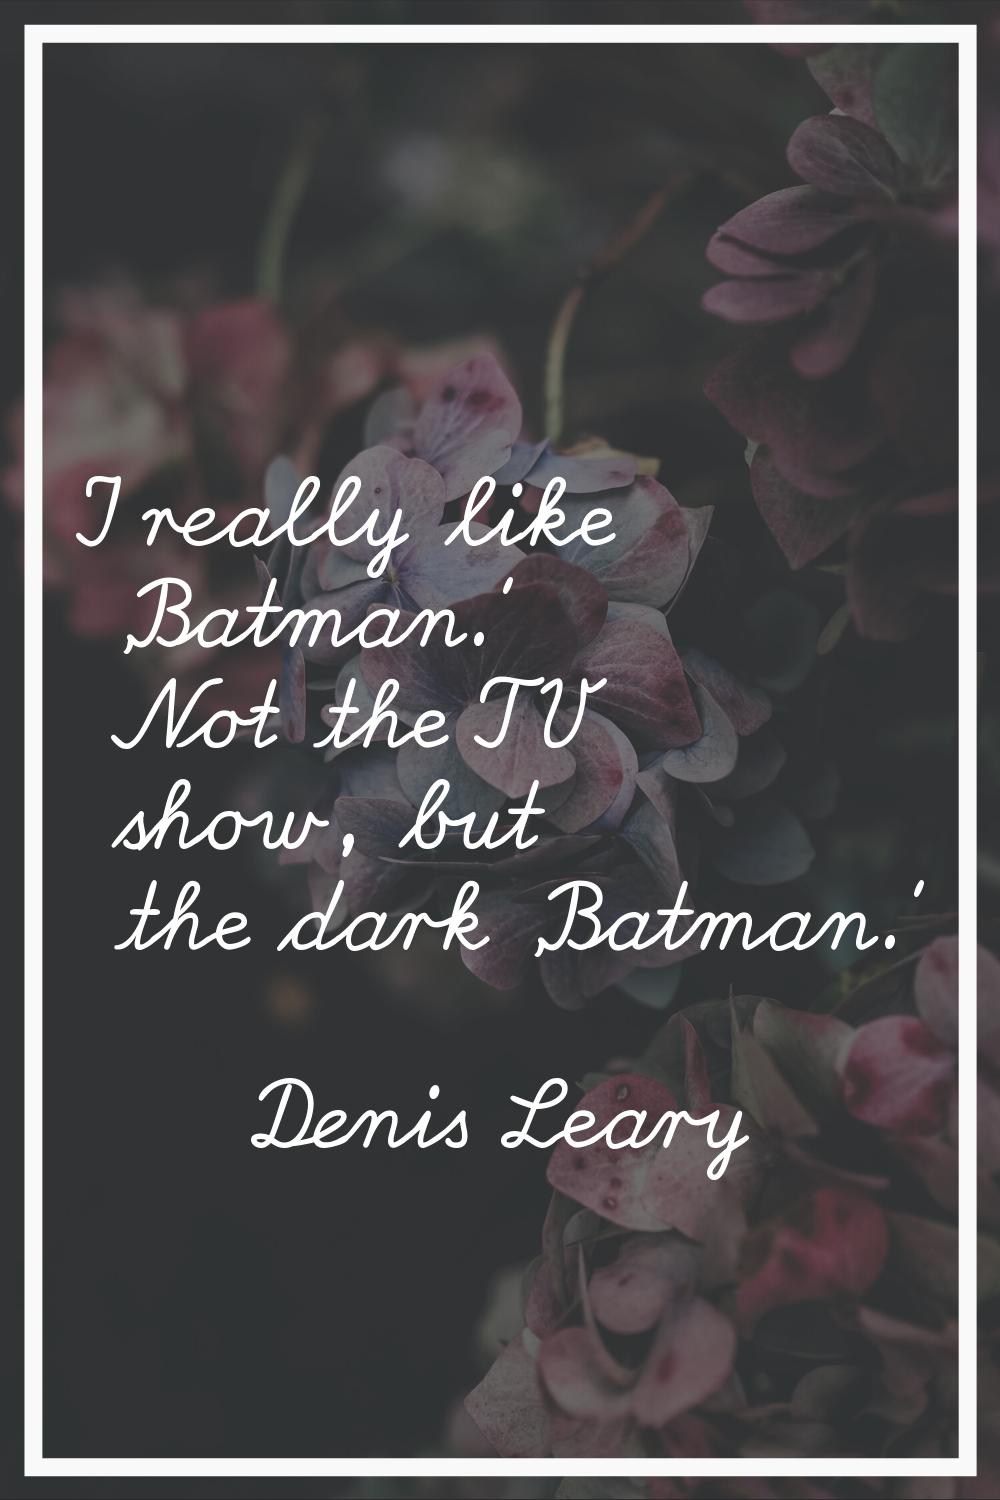 I really like 'Batman.' Not the TV show, but the dark 'Batman.'